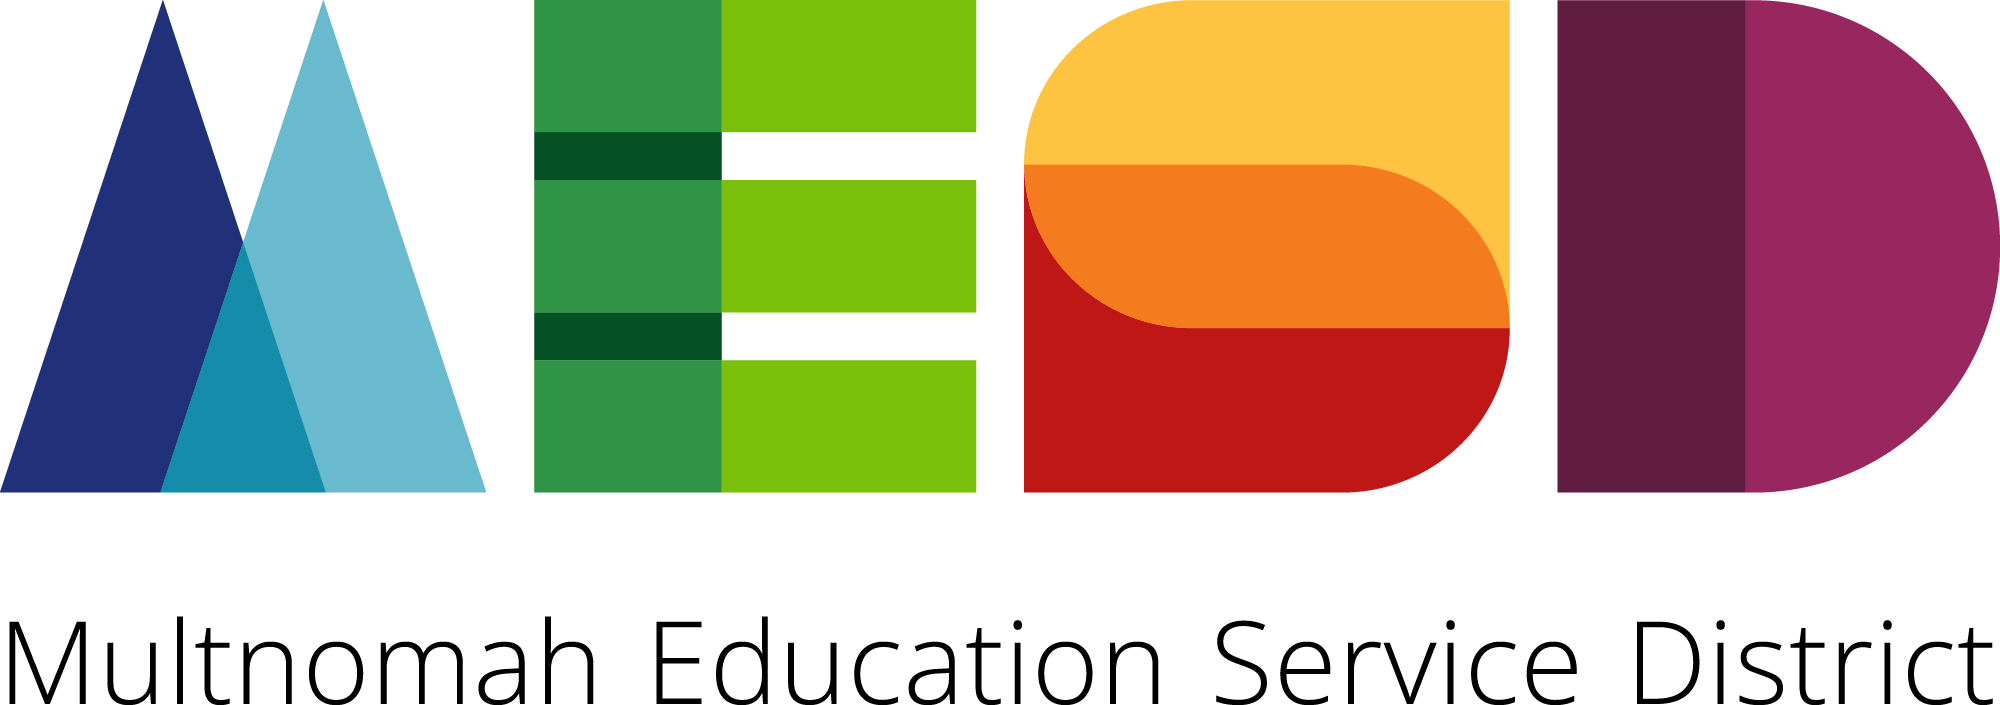 MESD Logo with Name